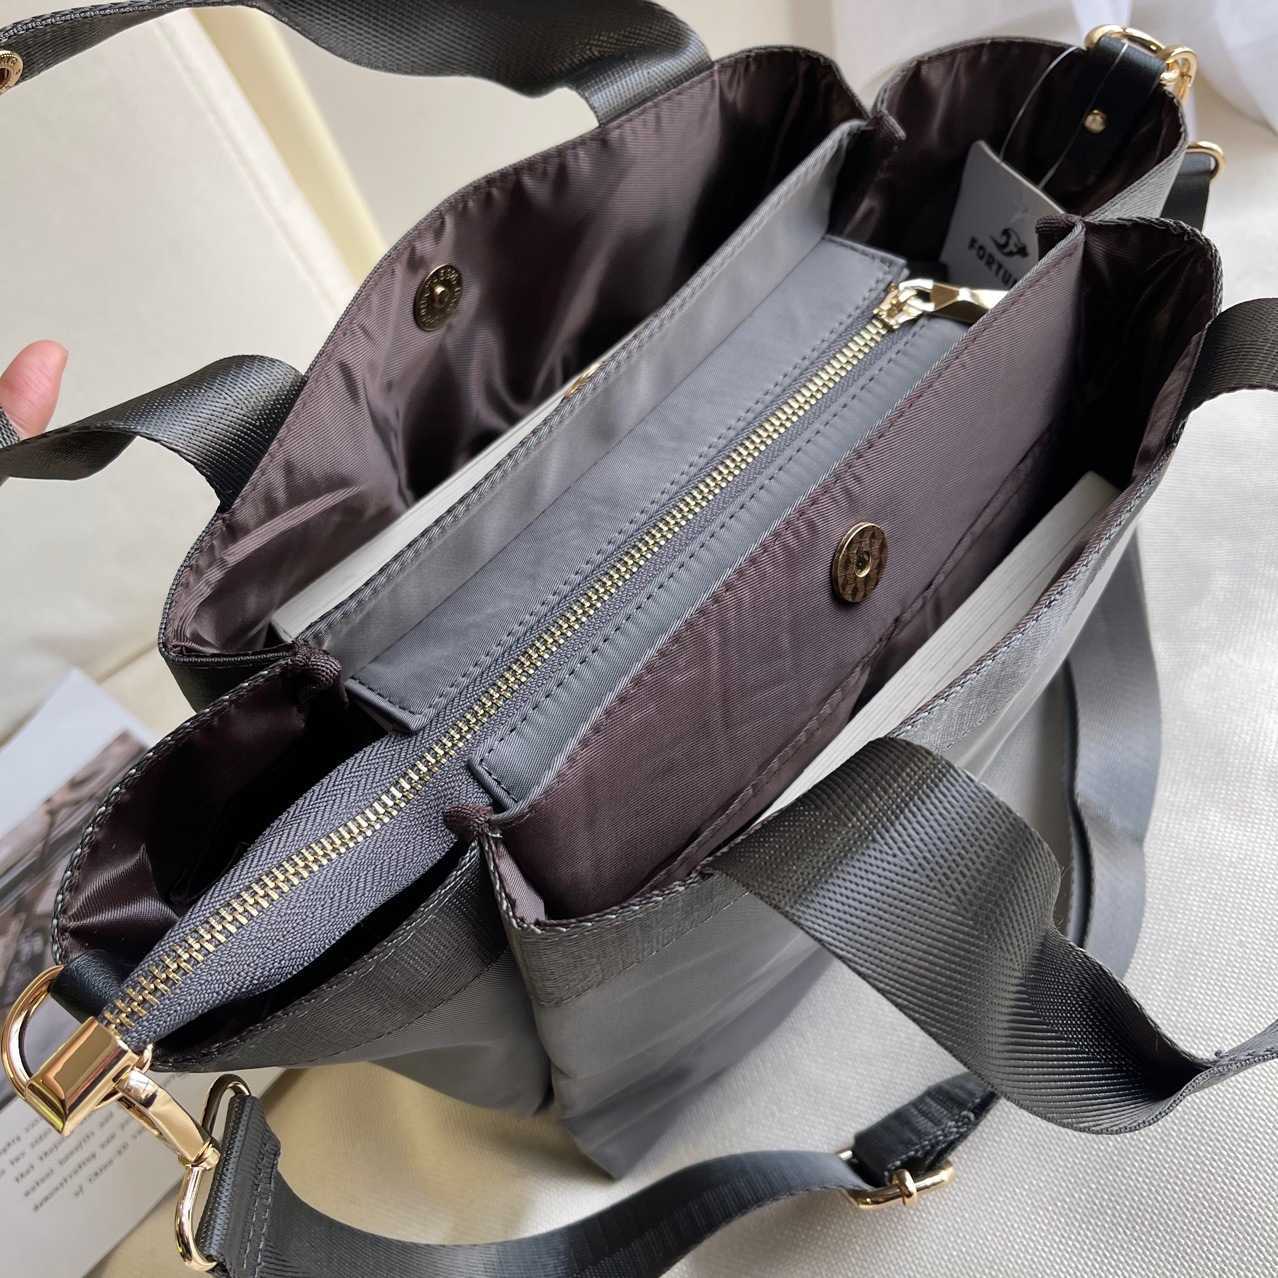 Storage Bags Handbags For Women Tote Bag Large Capacity Ladies Shopping Bag Top-Handle Hobo Shoulder Casual Beach Bags Black Red Dark Grey P230510